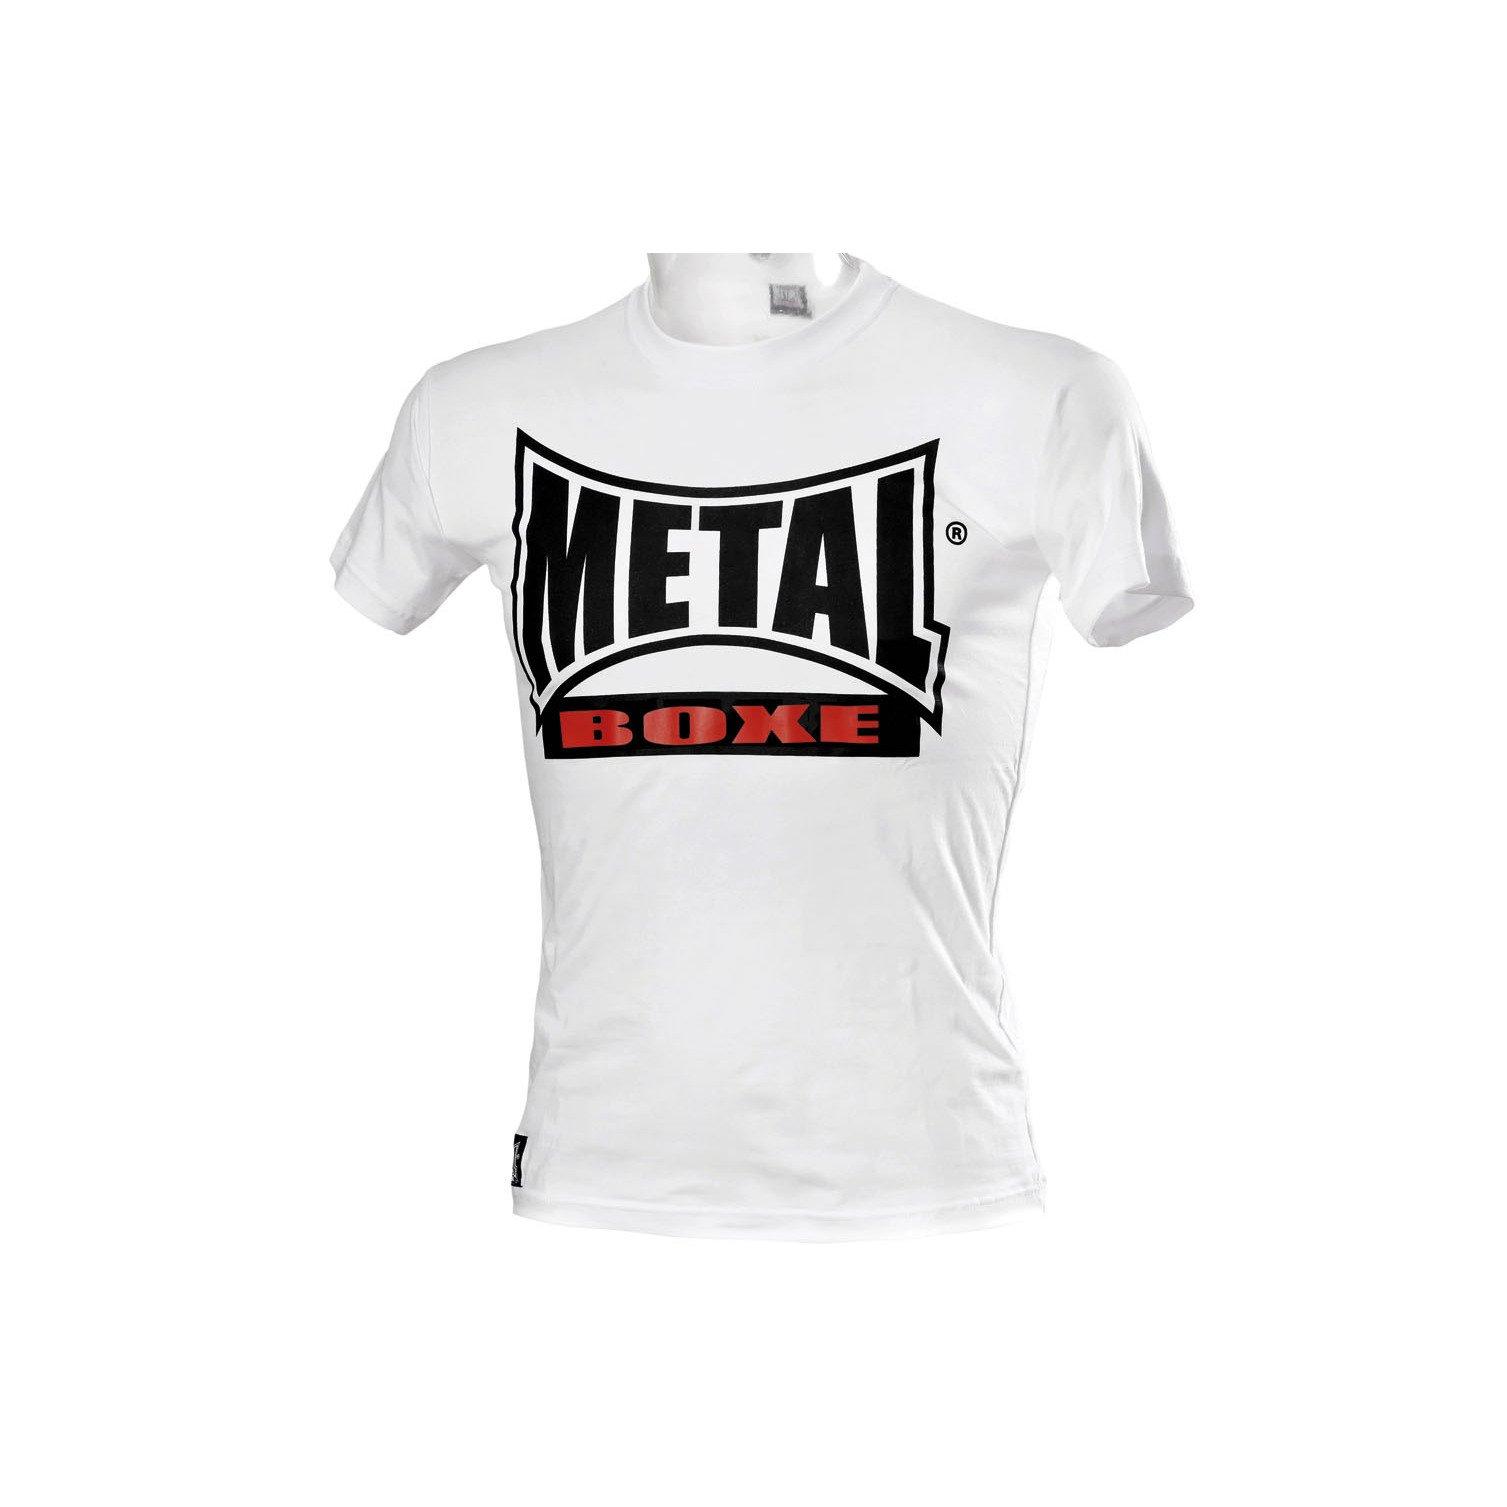 METALBOXE  T-Shirt mit kurzen Ärmeln  new visual 